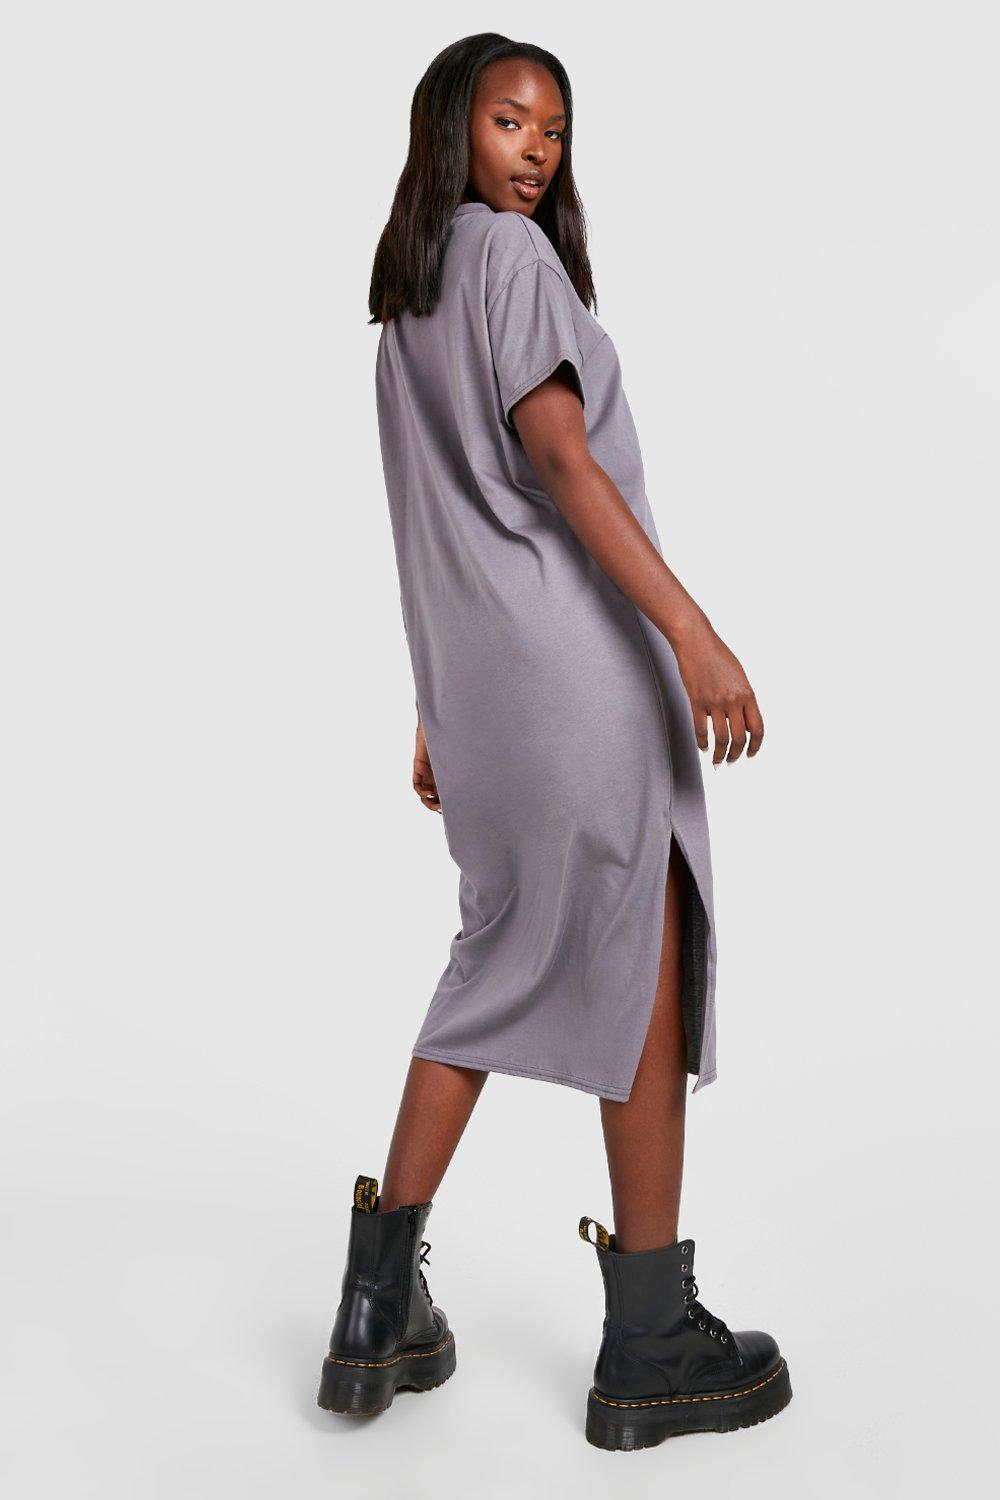 https://media.boohoo.com/i/boohoo/gzz24351_charcoal_xl_1/female-charcoal-basics-oversized-basic-midi-t-shirt-dress